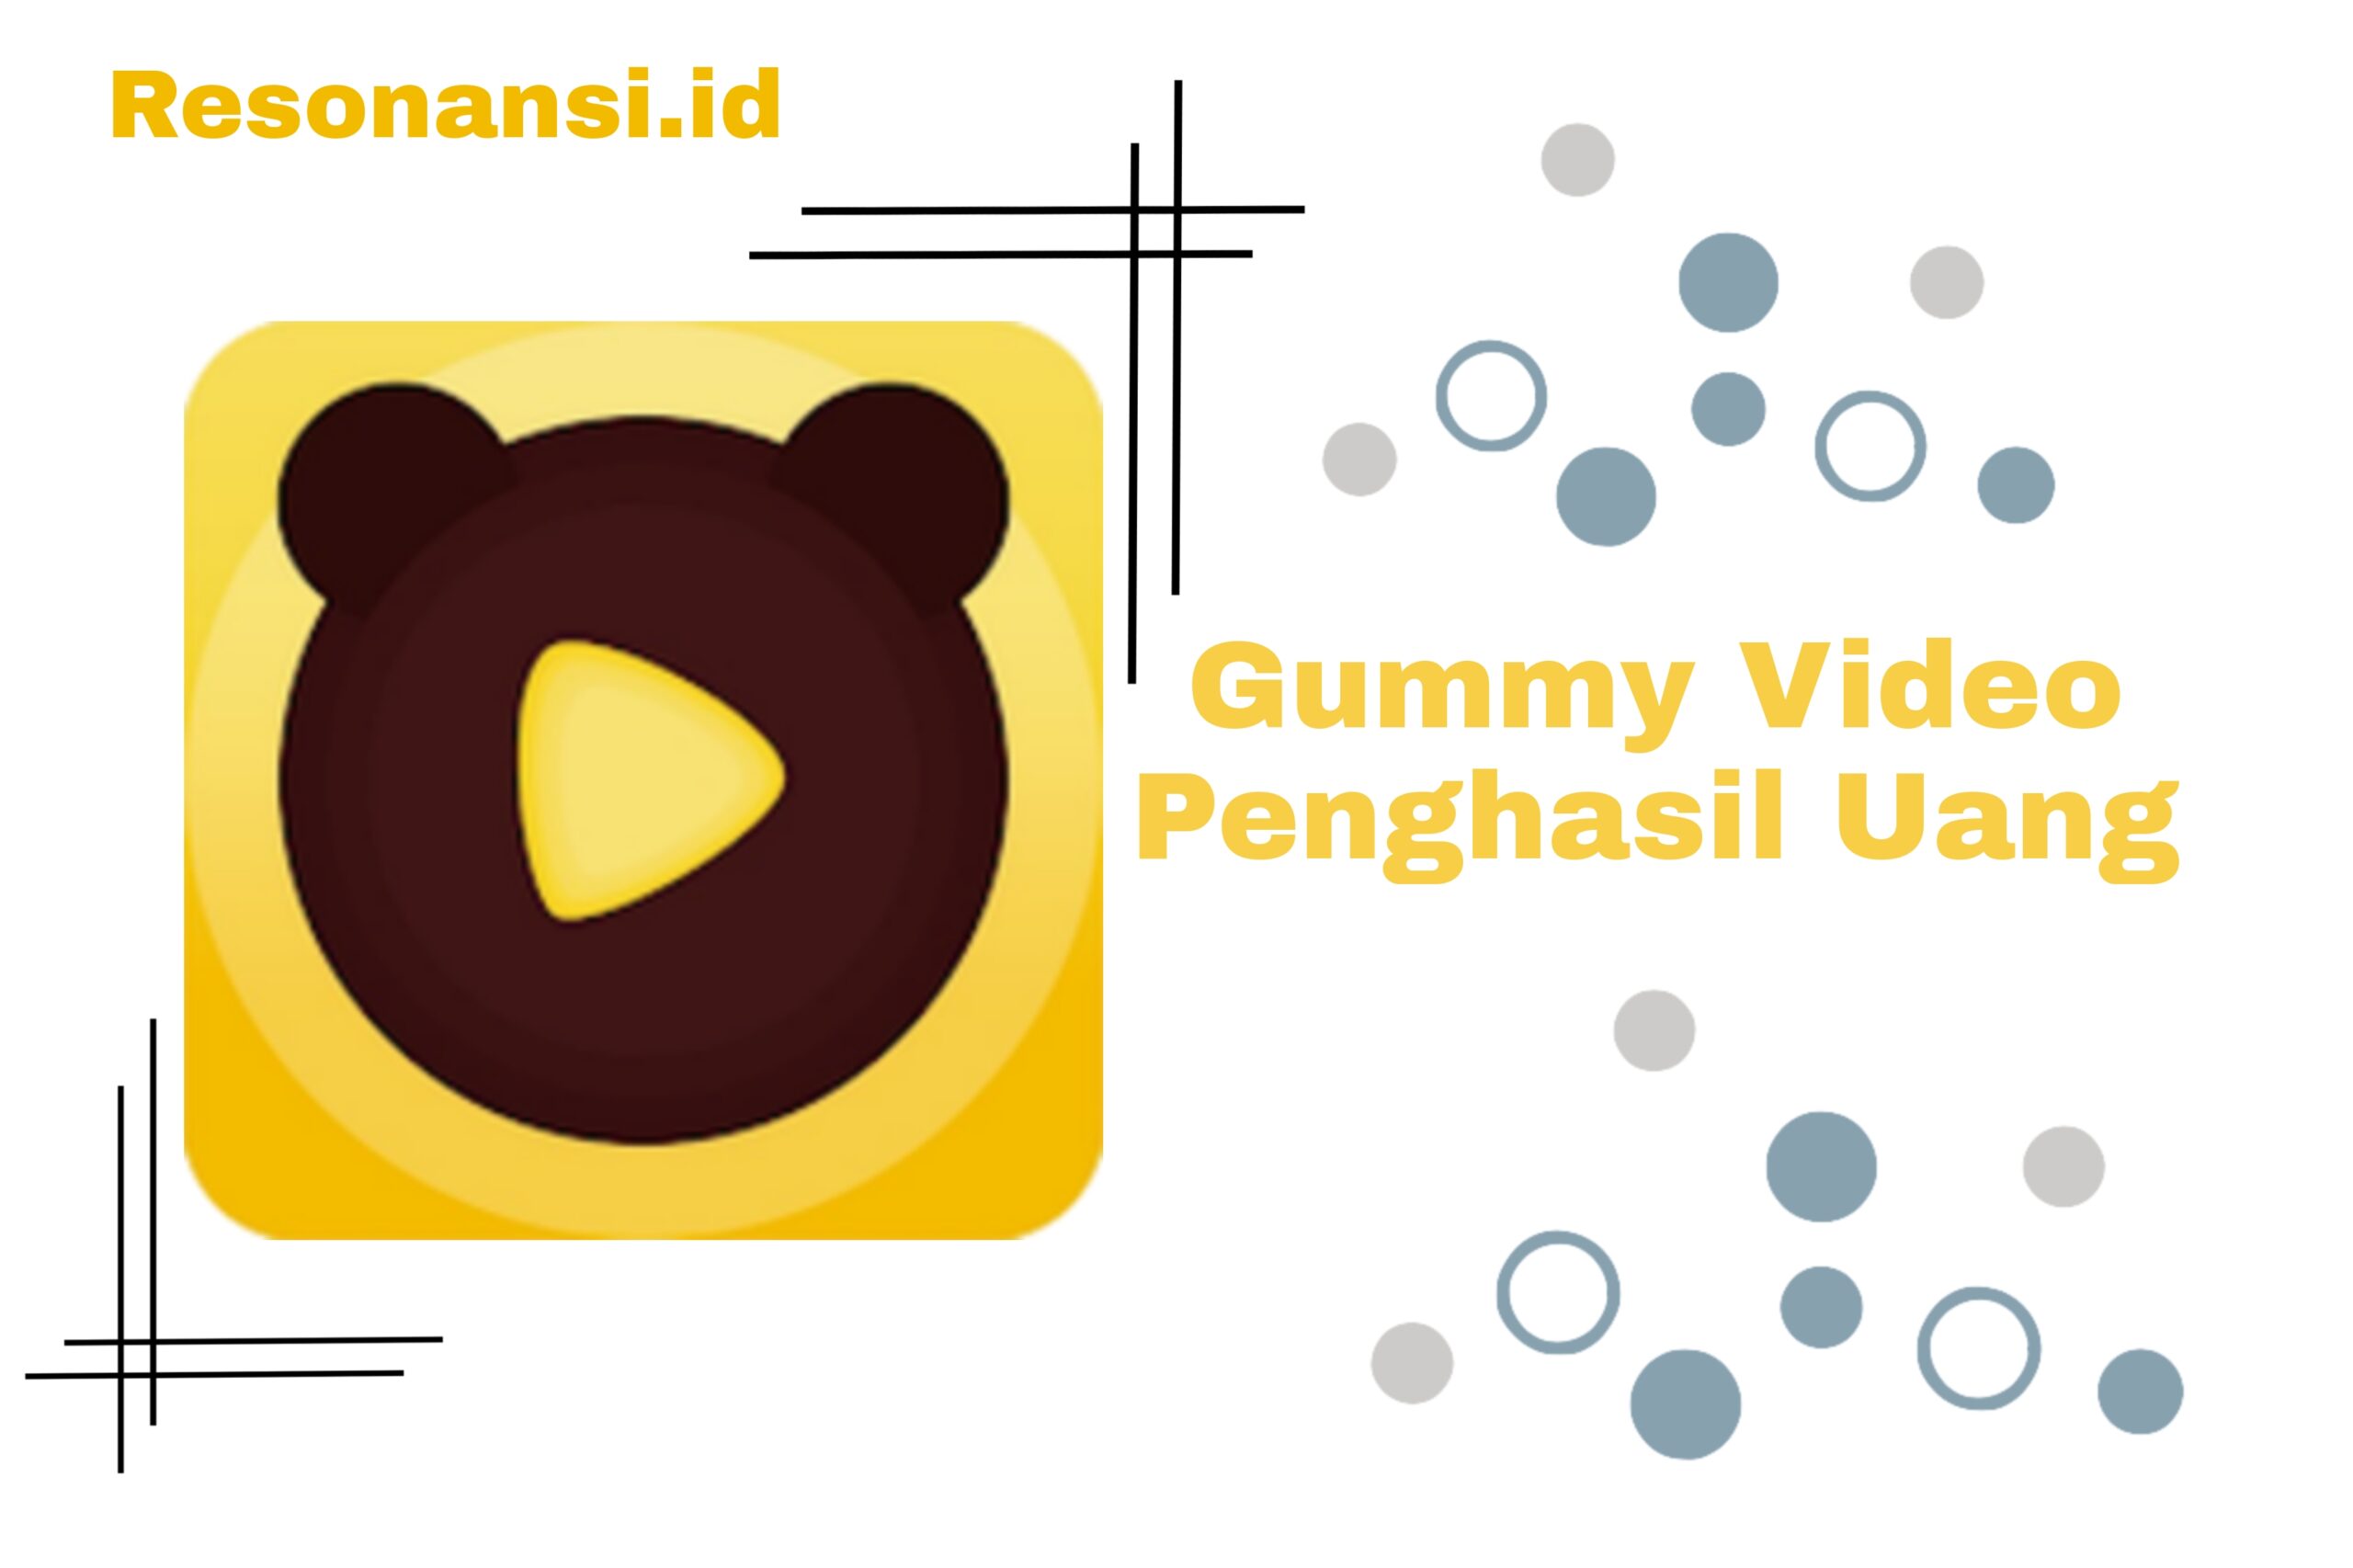 Gummy Video Apk Penghasil Uang